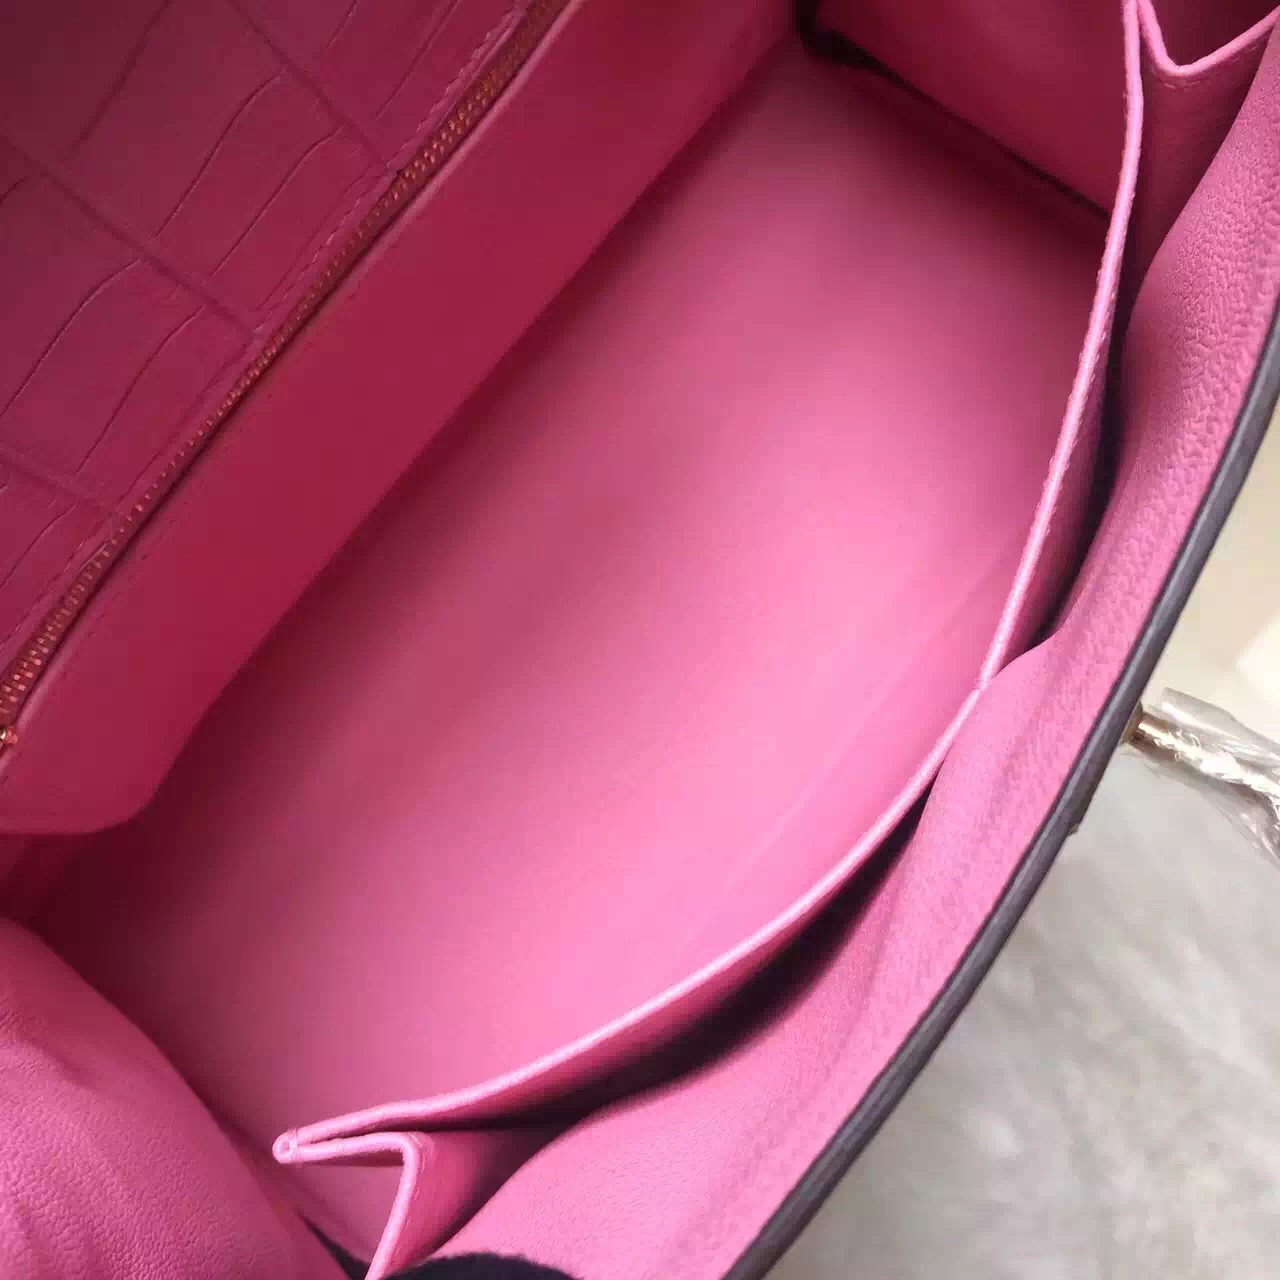 Hermes Crocodile Matt Leather Kelly Bag 28cm in 5P Sakura Pink